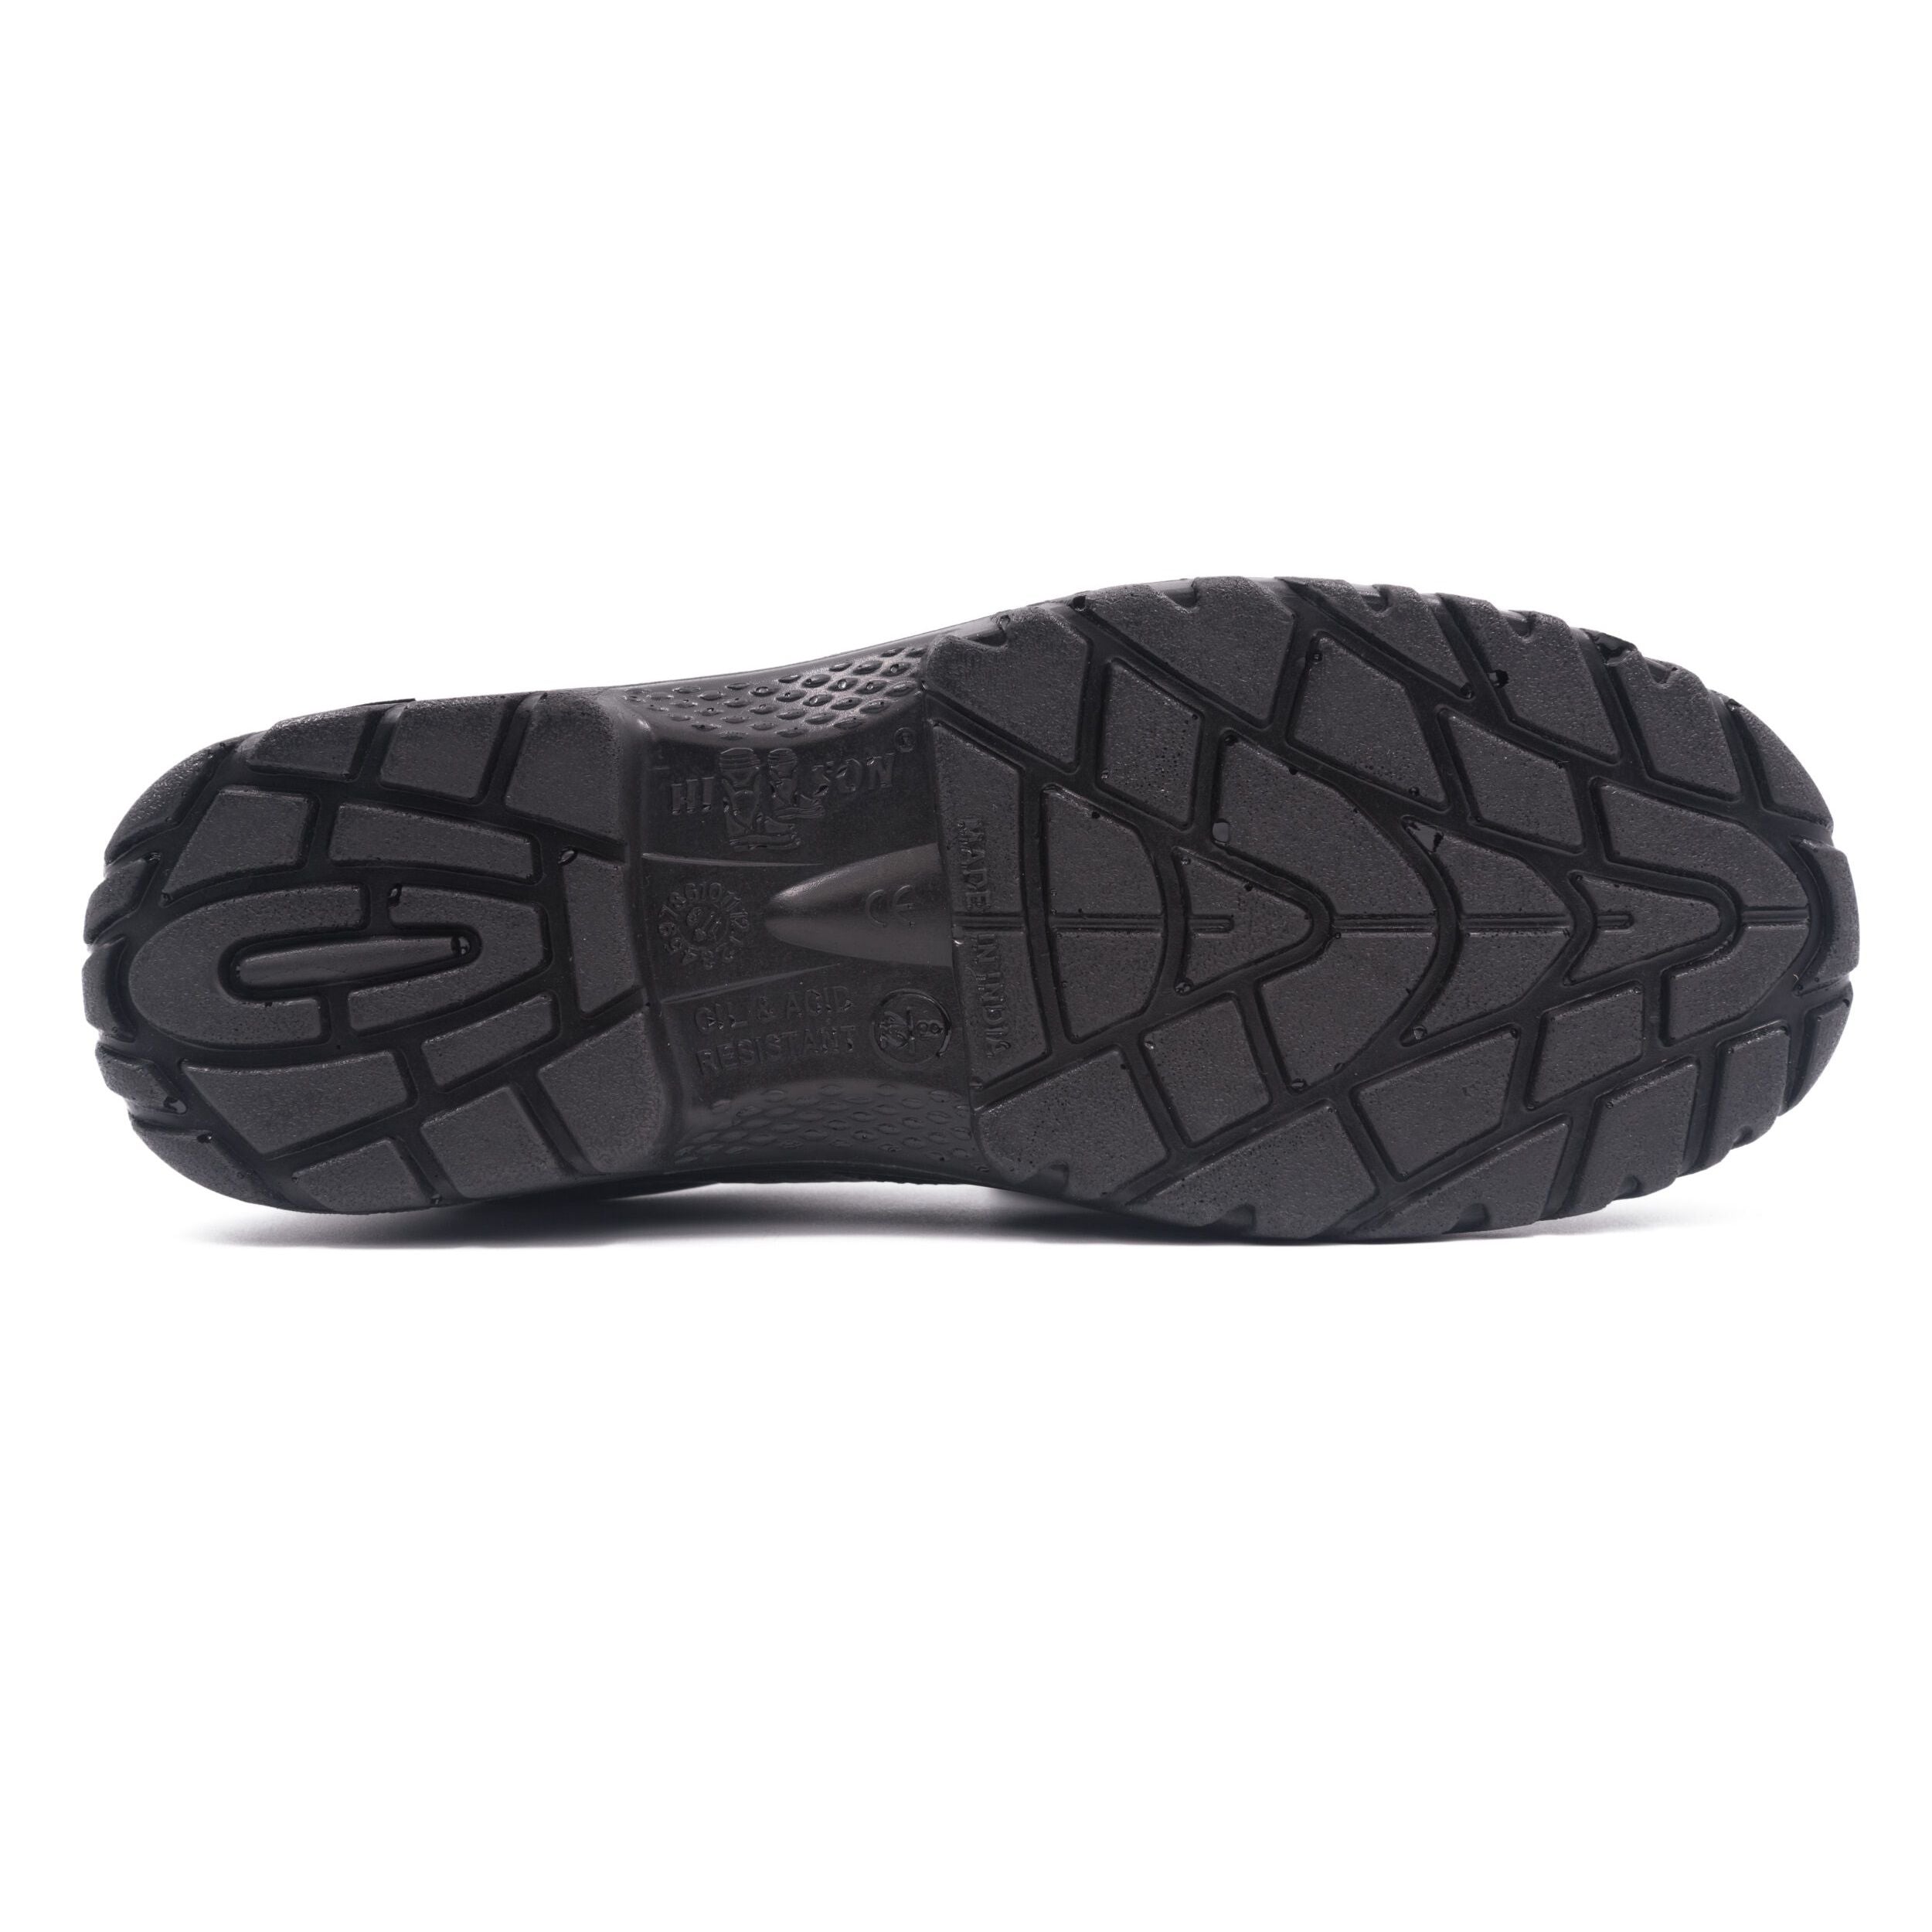 Hillson Argo Leather Steel Toe Black Safety Shoe